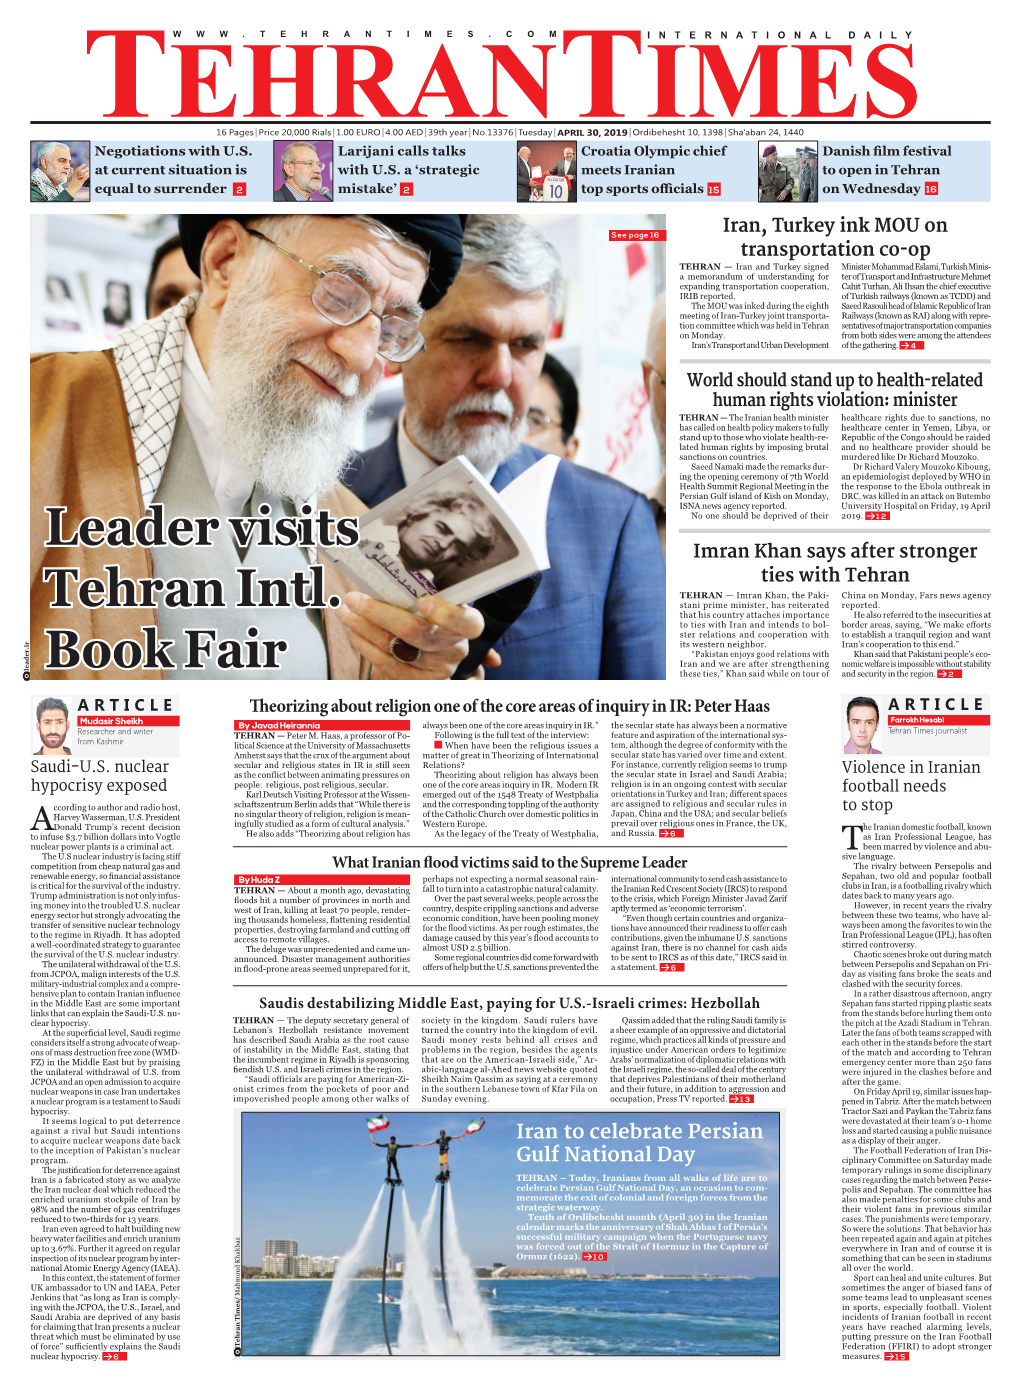 Leader Visits Tehran Intl. Book Fair